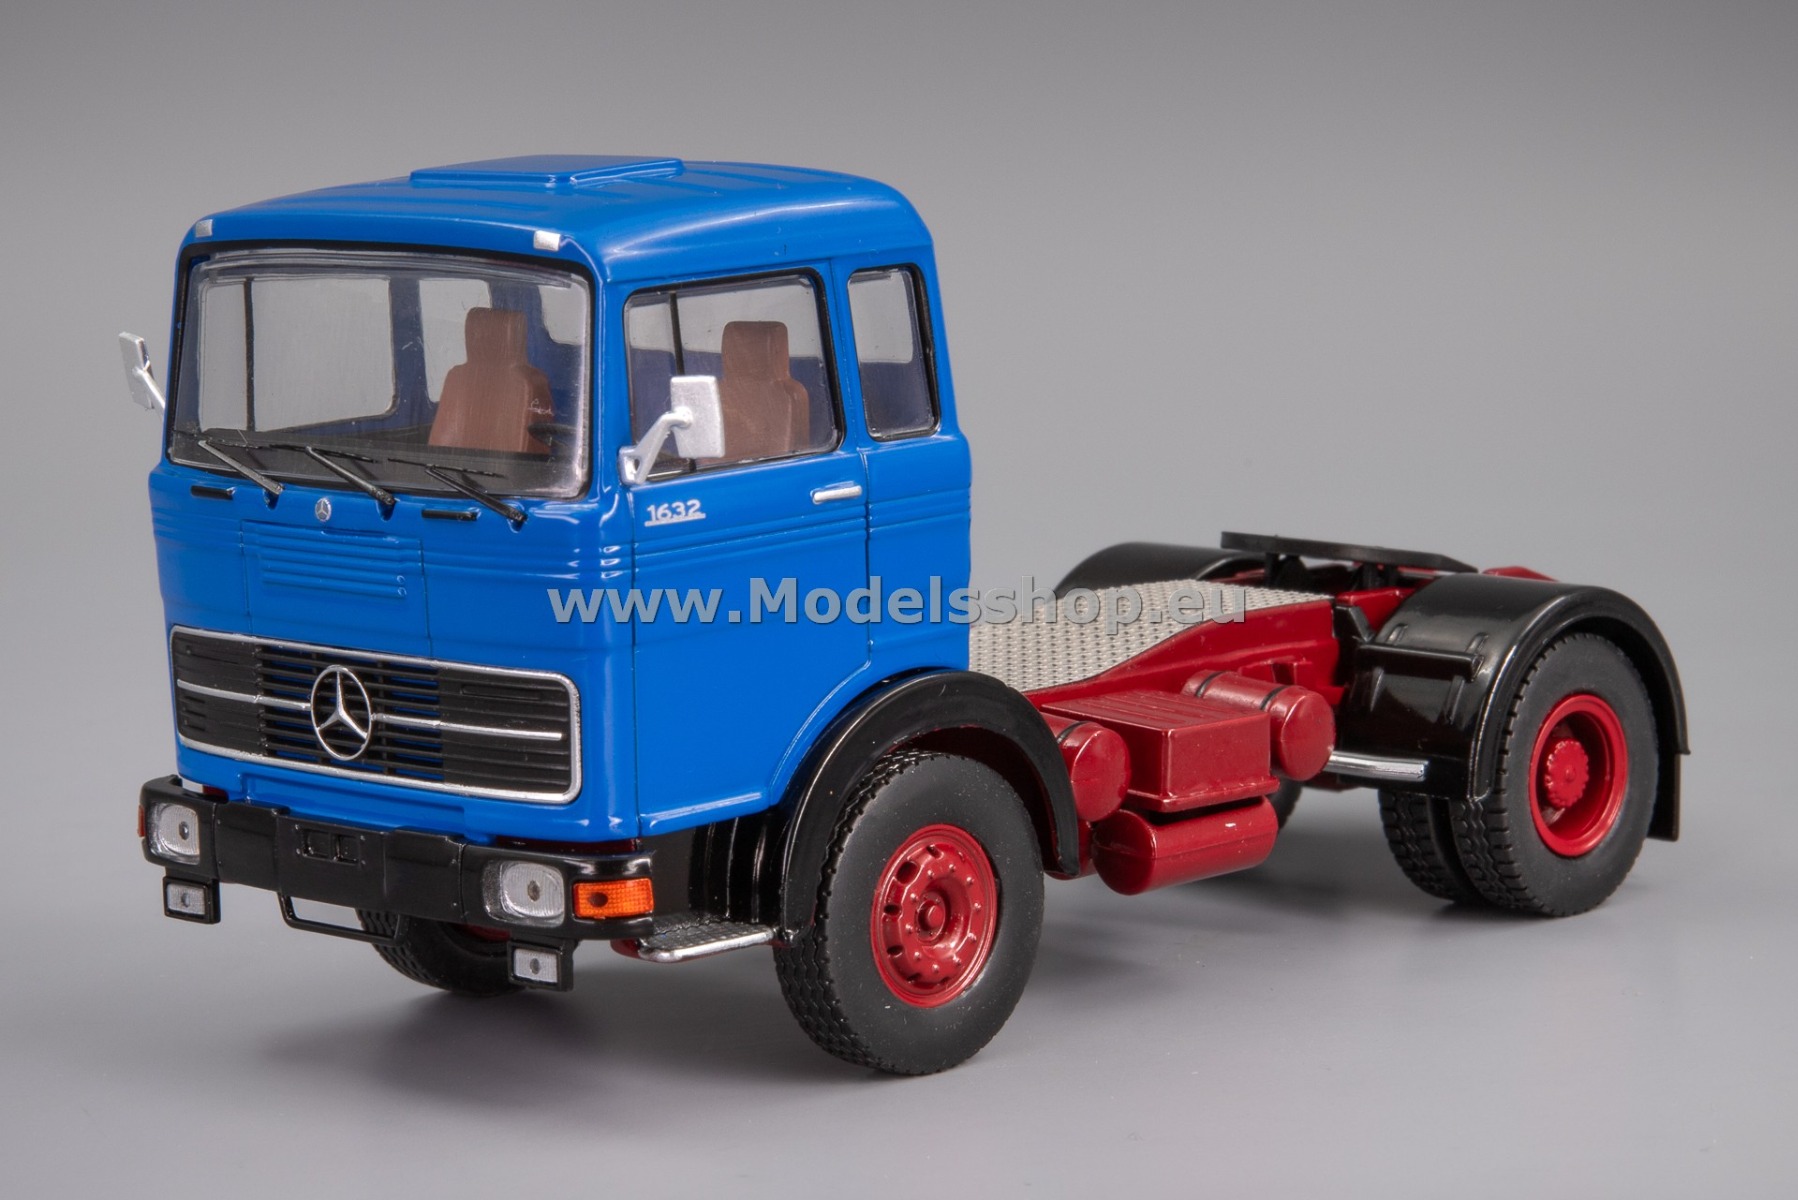 IXOTR175.22 Mercedes-Benz LPS 1632 tractor truck, 1970 /blue/